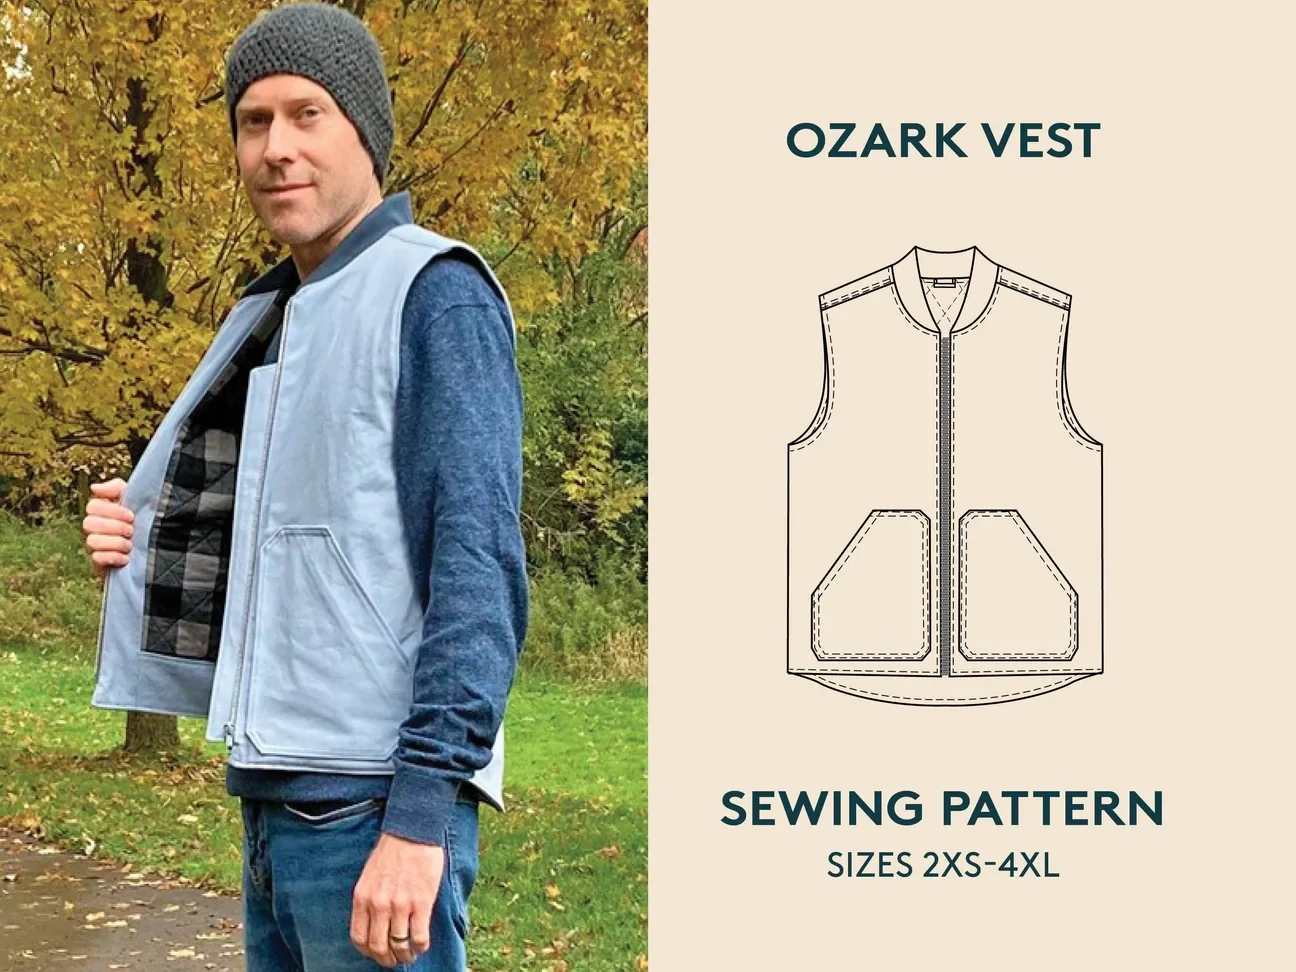 The Ozark Vest